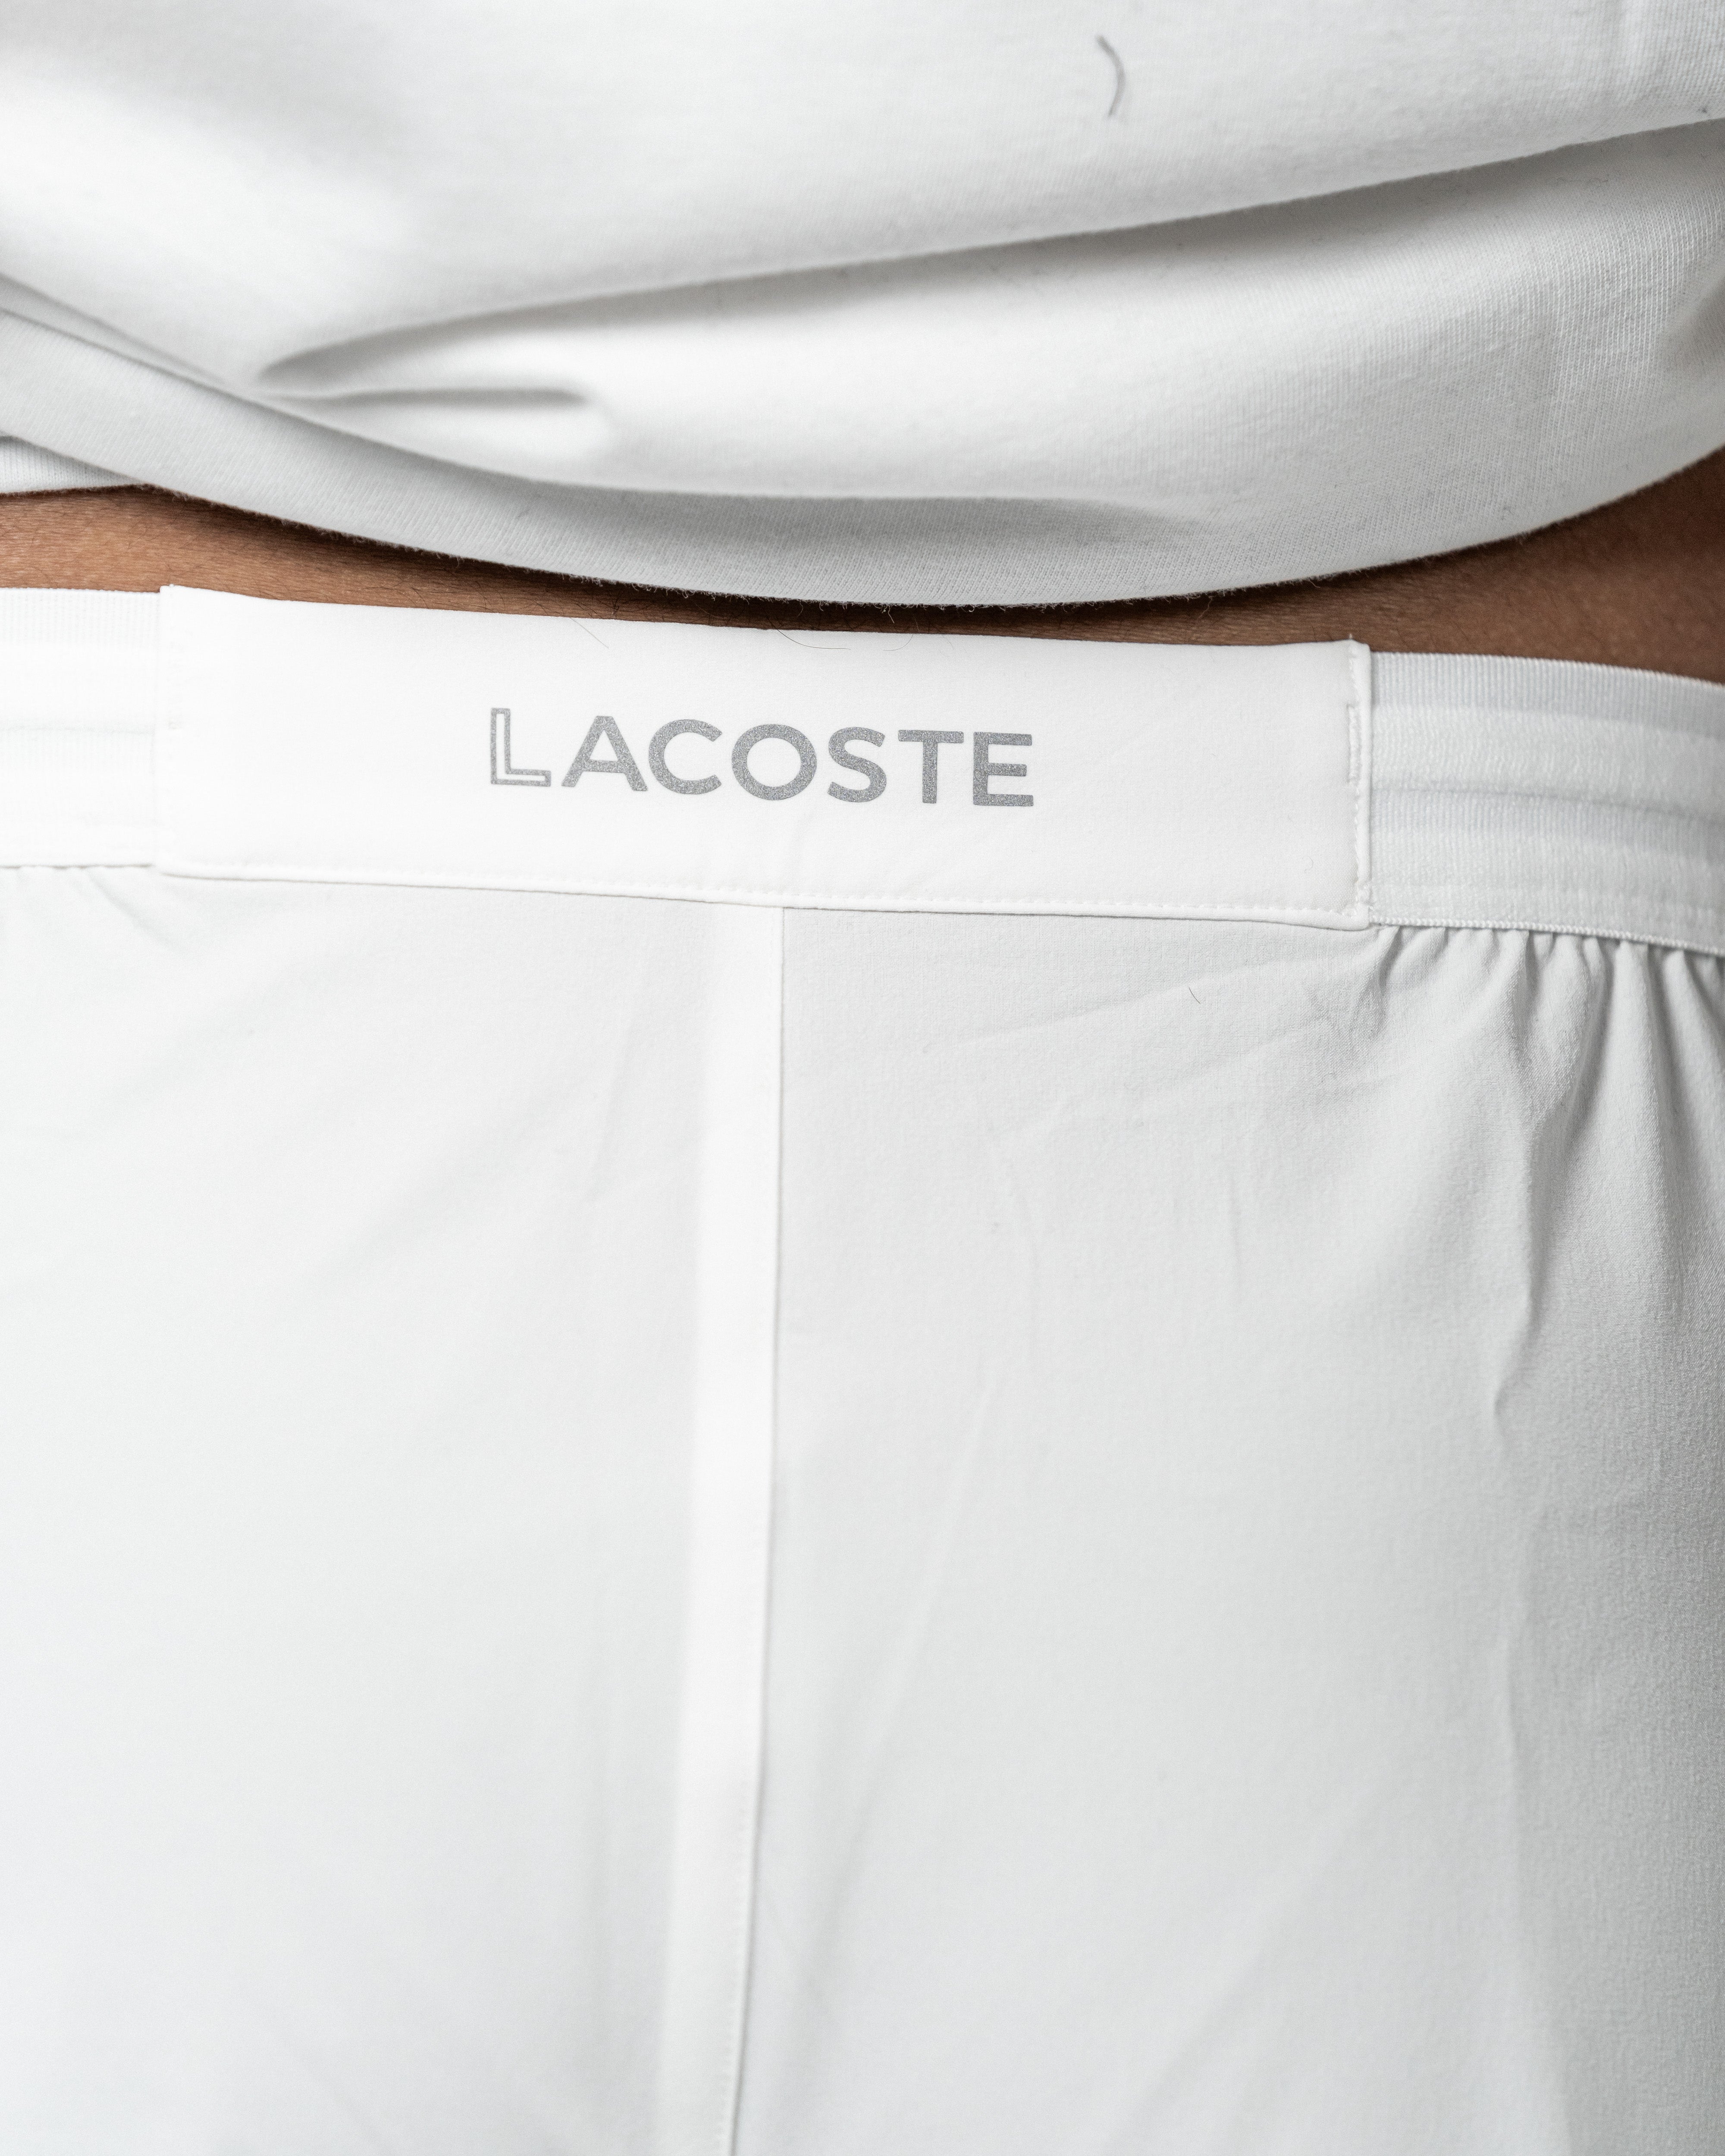 Lacoste Herre Shorts Hvid